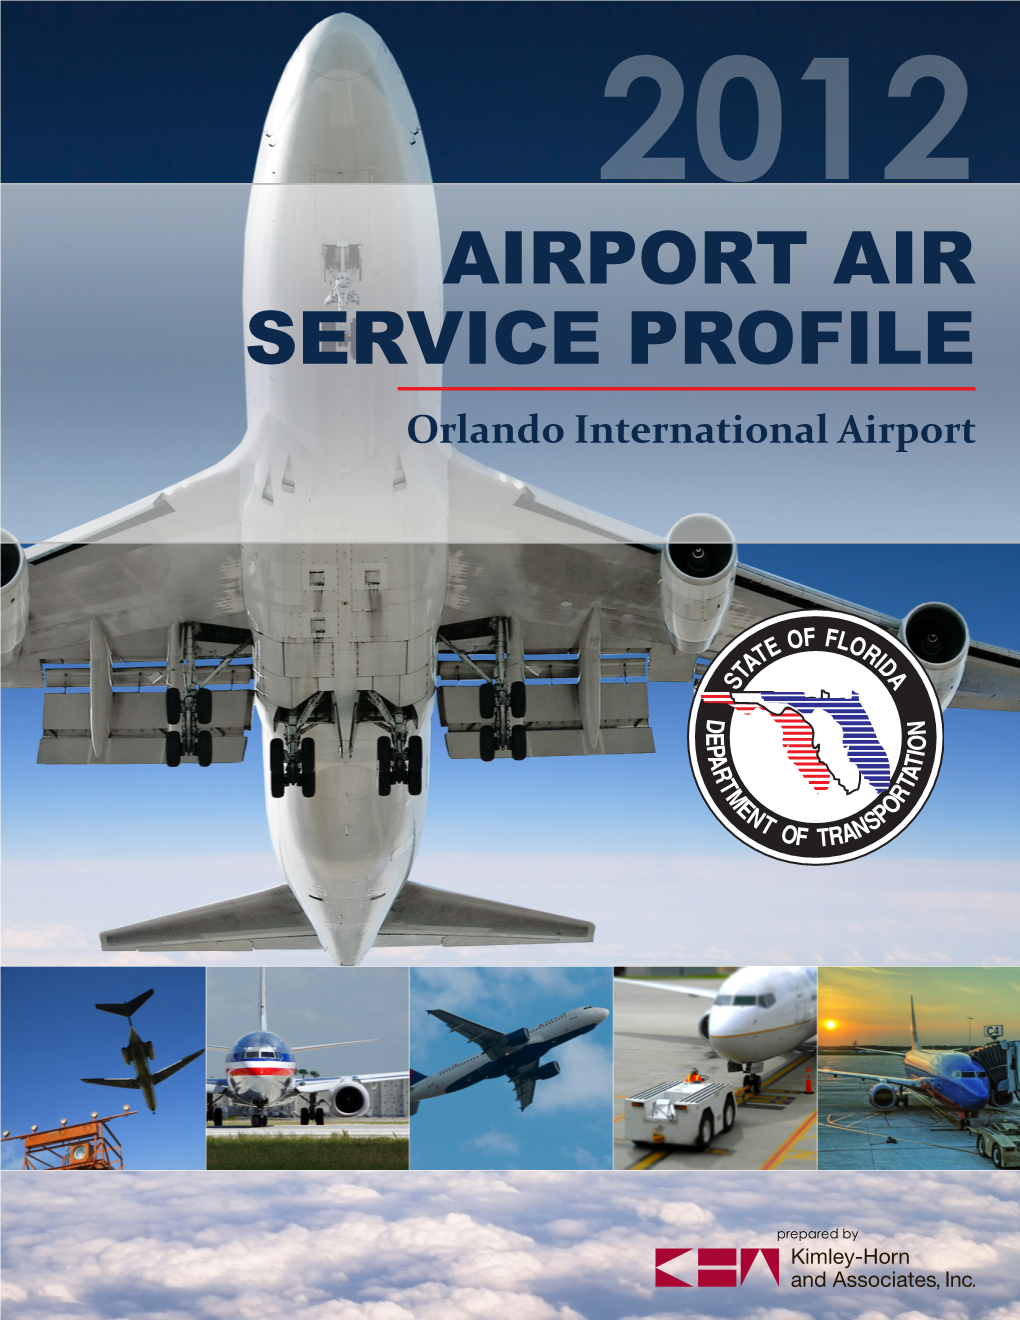 AIRPORT AIR SERVICE PROFILE Orlando International Airport